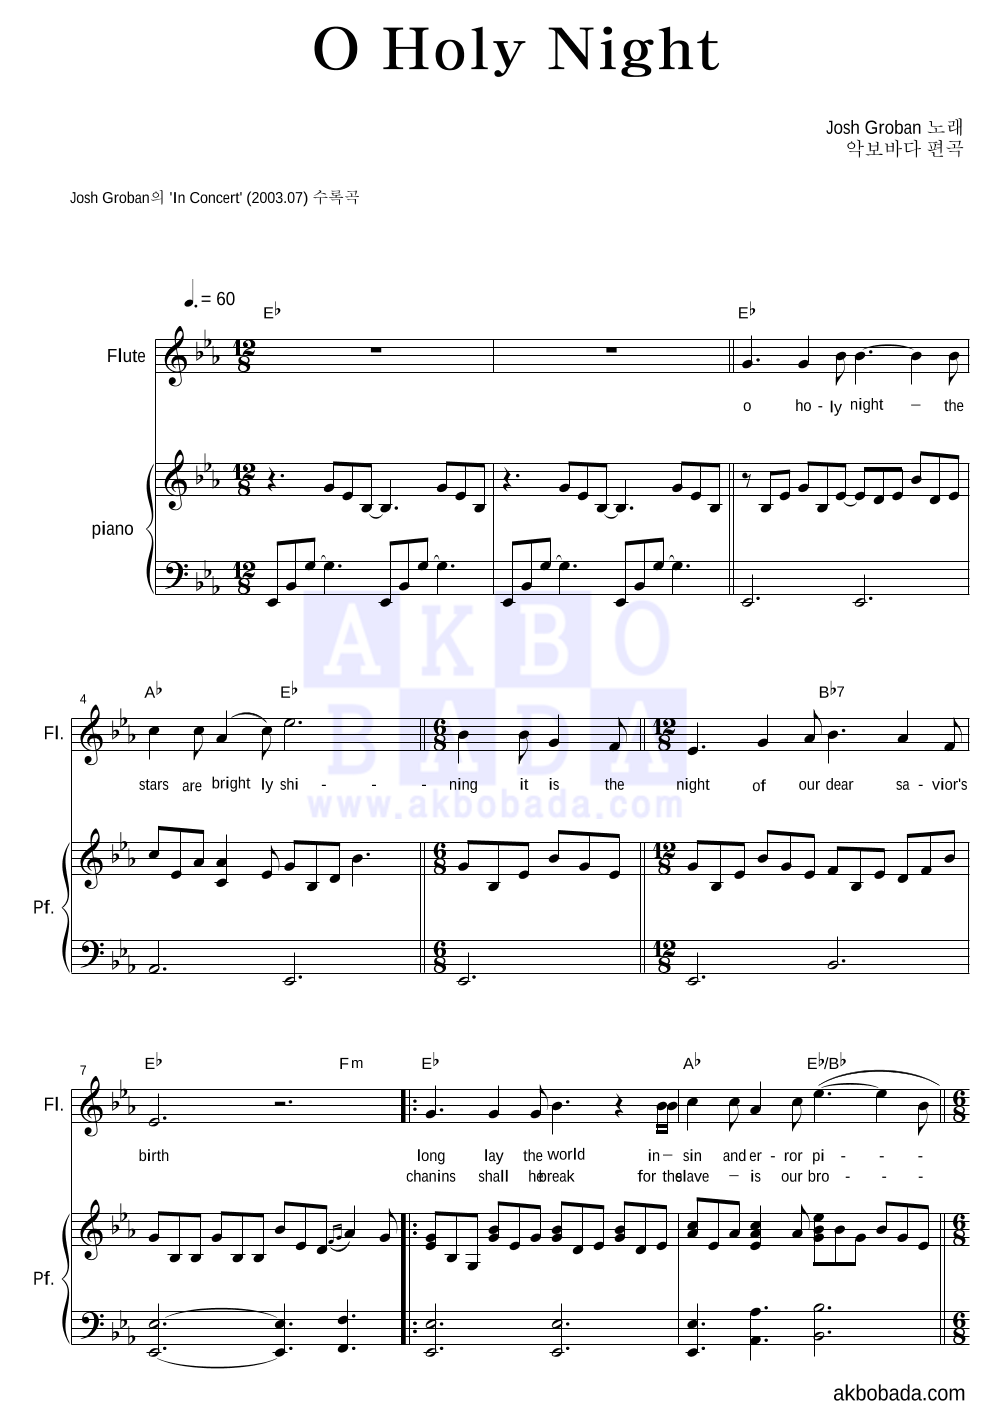 Josh Groban - O Holy Night 플룻&피아노 악보 